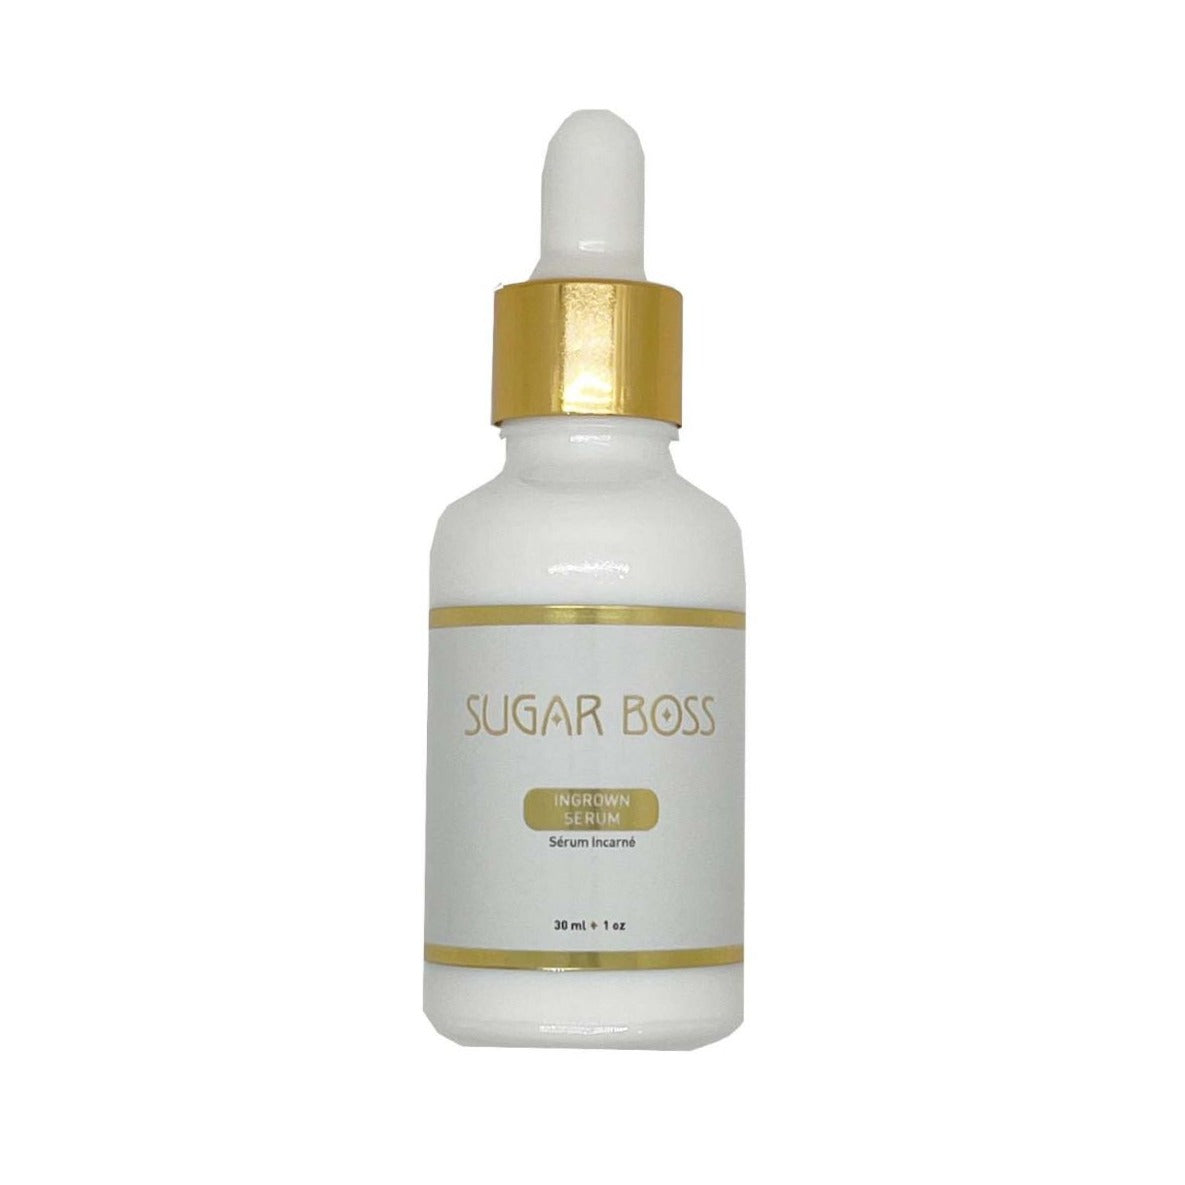 Sugar Boss - Ingrown Serum - Creata Beauty - Professional Beauty Products